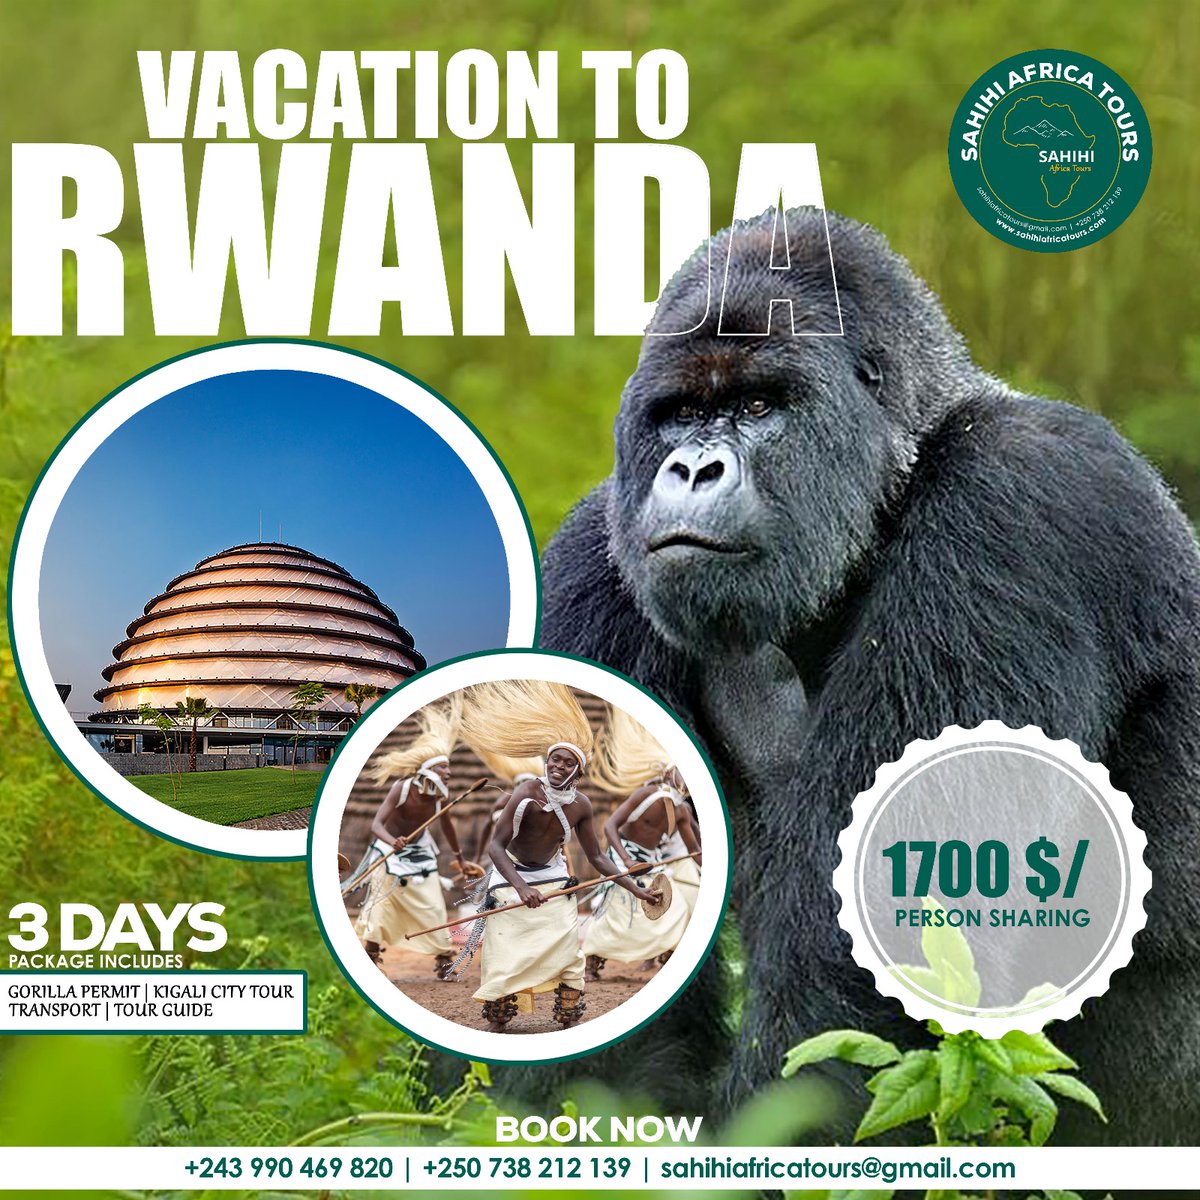 Here is a #christmasdeal for u!
Bring ur family, friends & beloved 1 to #Rwanda & have a memorable #vacation.

👉🏽sahihiafricatours@gmail.com

#visitrwanda #travel #usa #fly #Holidays #fun #NewYork #GORILLA #Honeymoon #ChristmasGift #HappyNewYear #FestiveSeason #Kigali #MoveAfrica